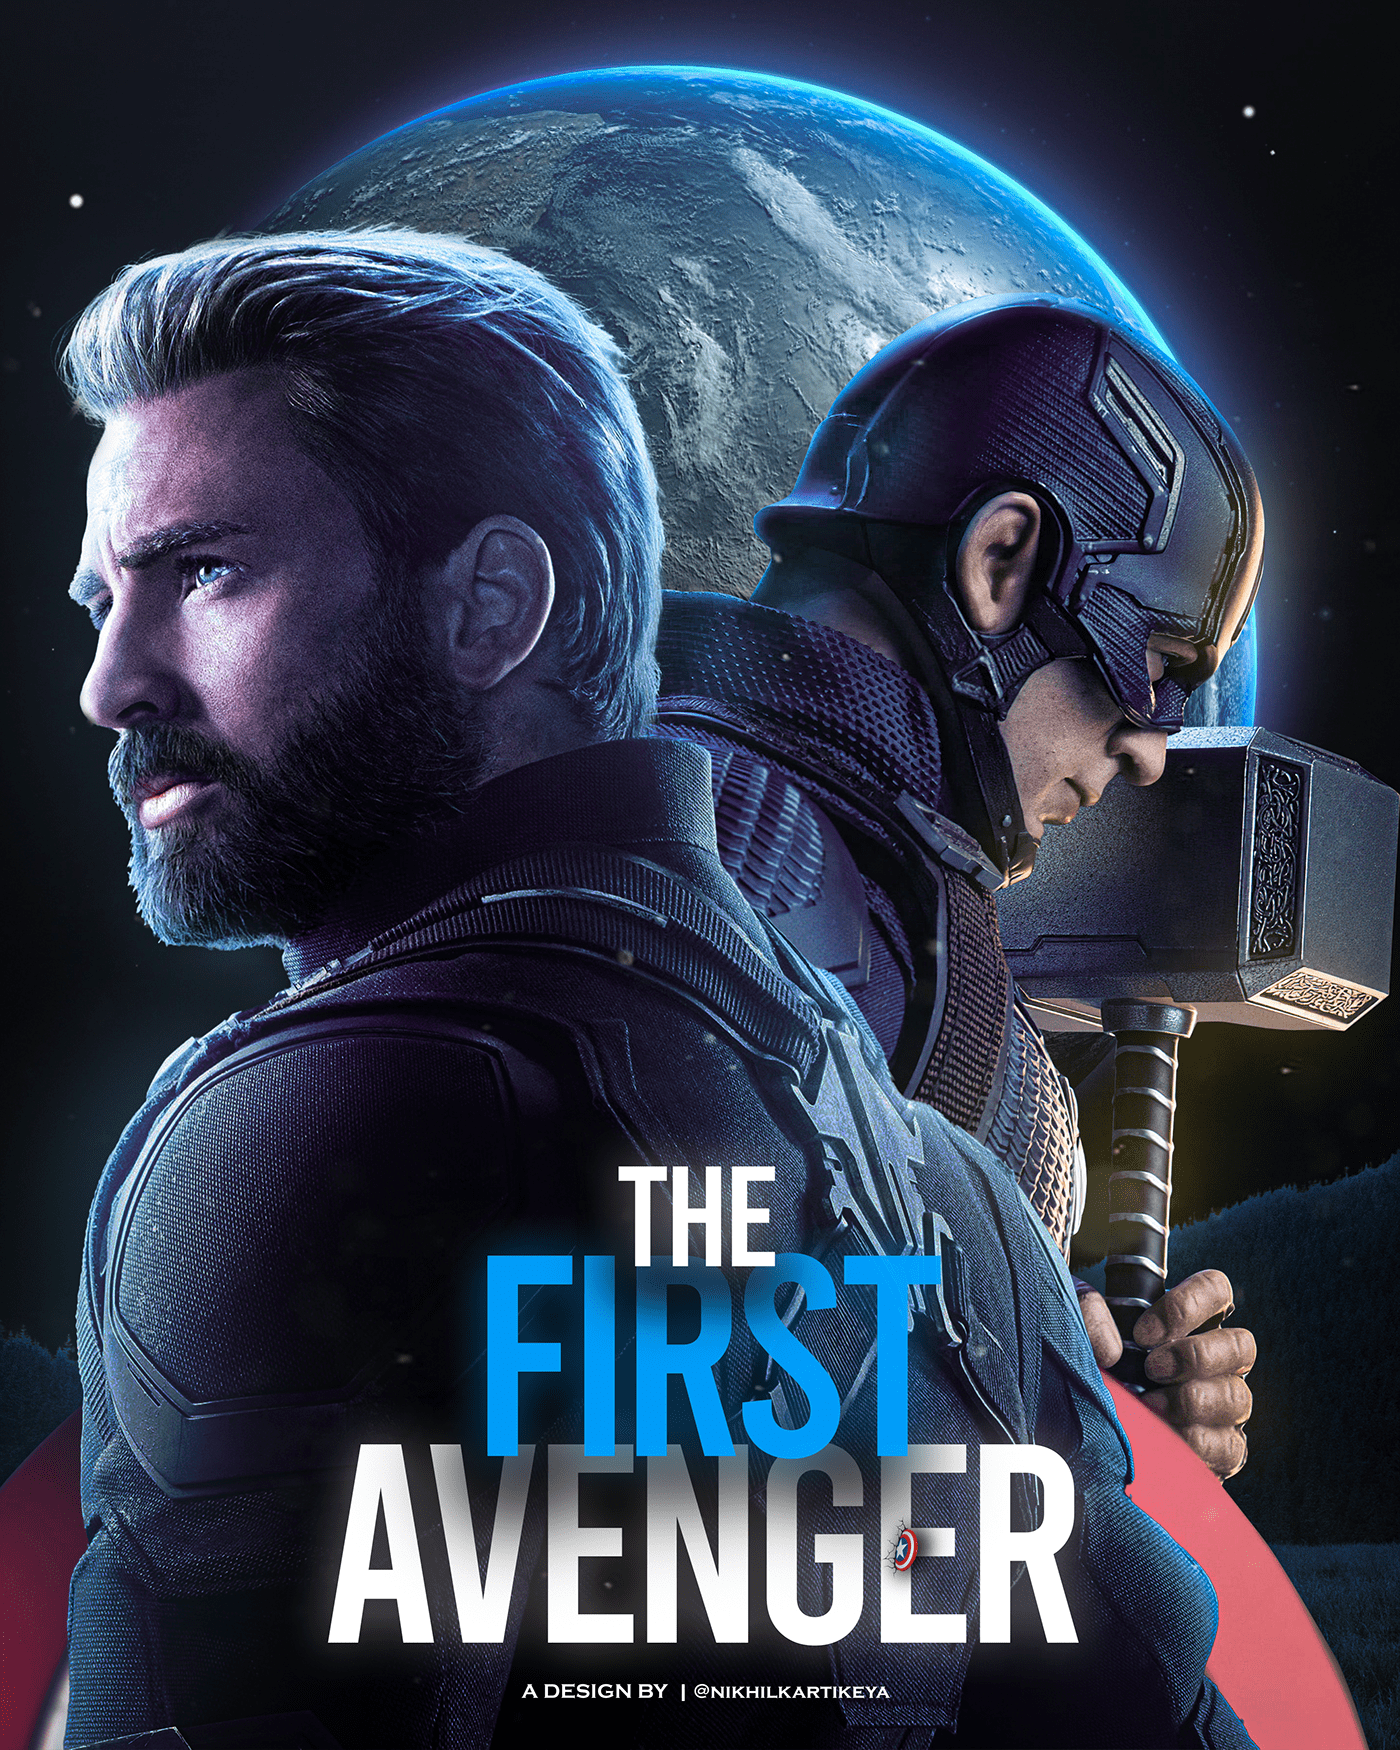 Avengers captain america Chris Evans comics iron man marvel marvel comics spiderman steve rogers tony stark